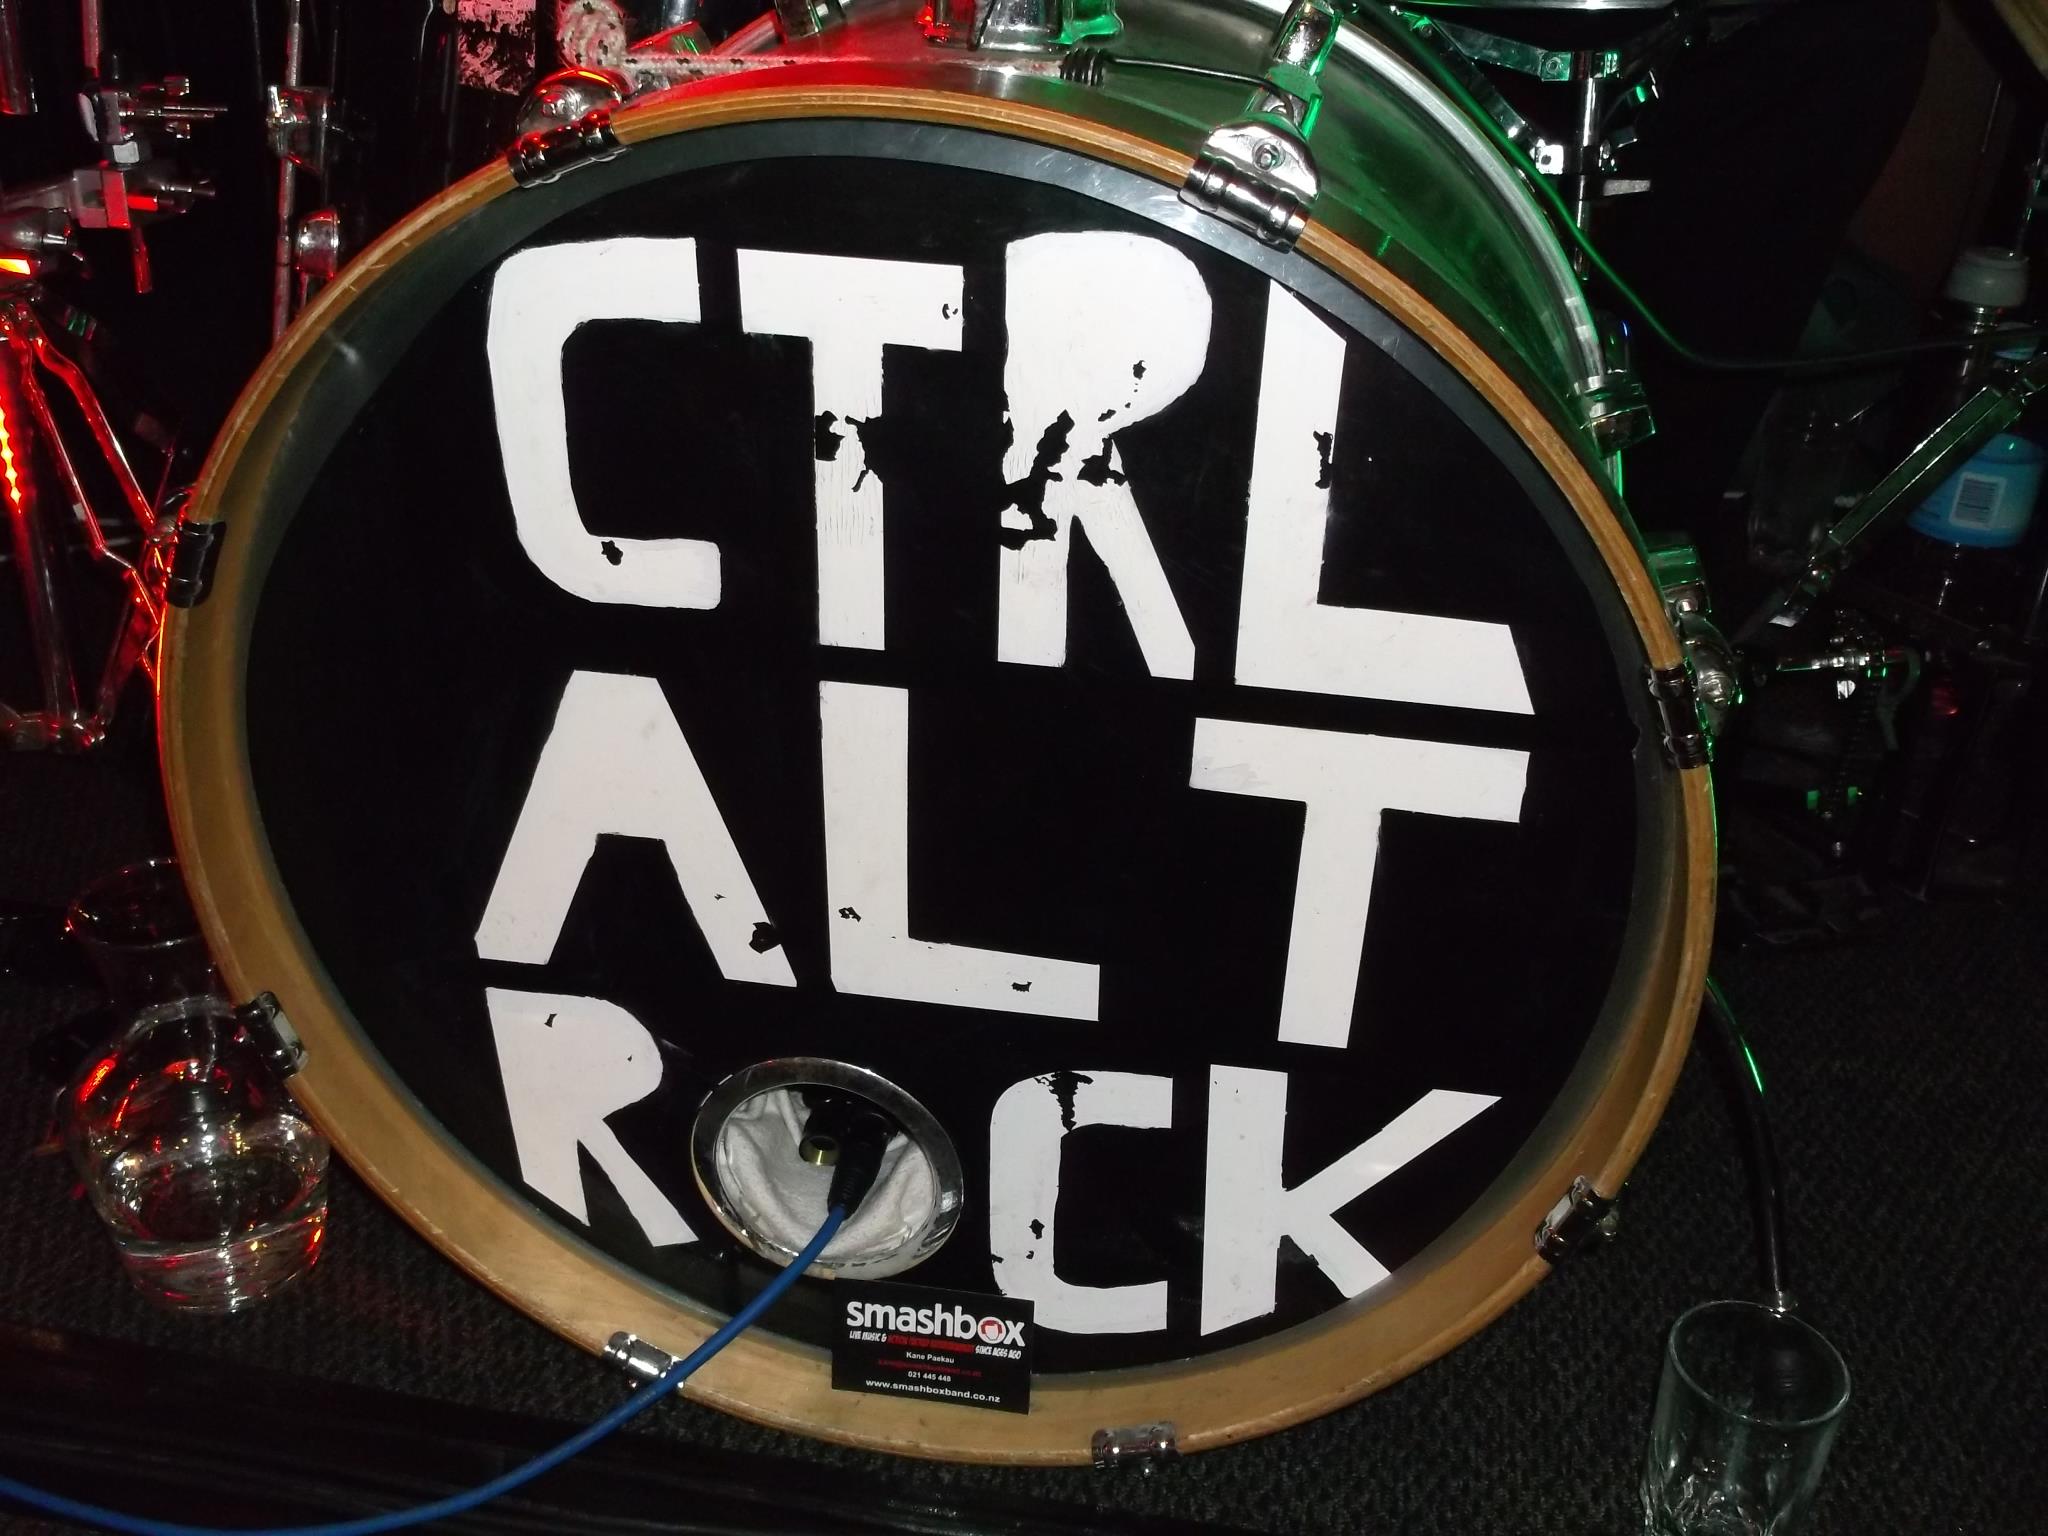 Christchurch covers band Ctrl Alt Rock